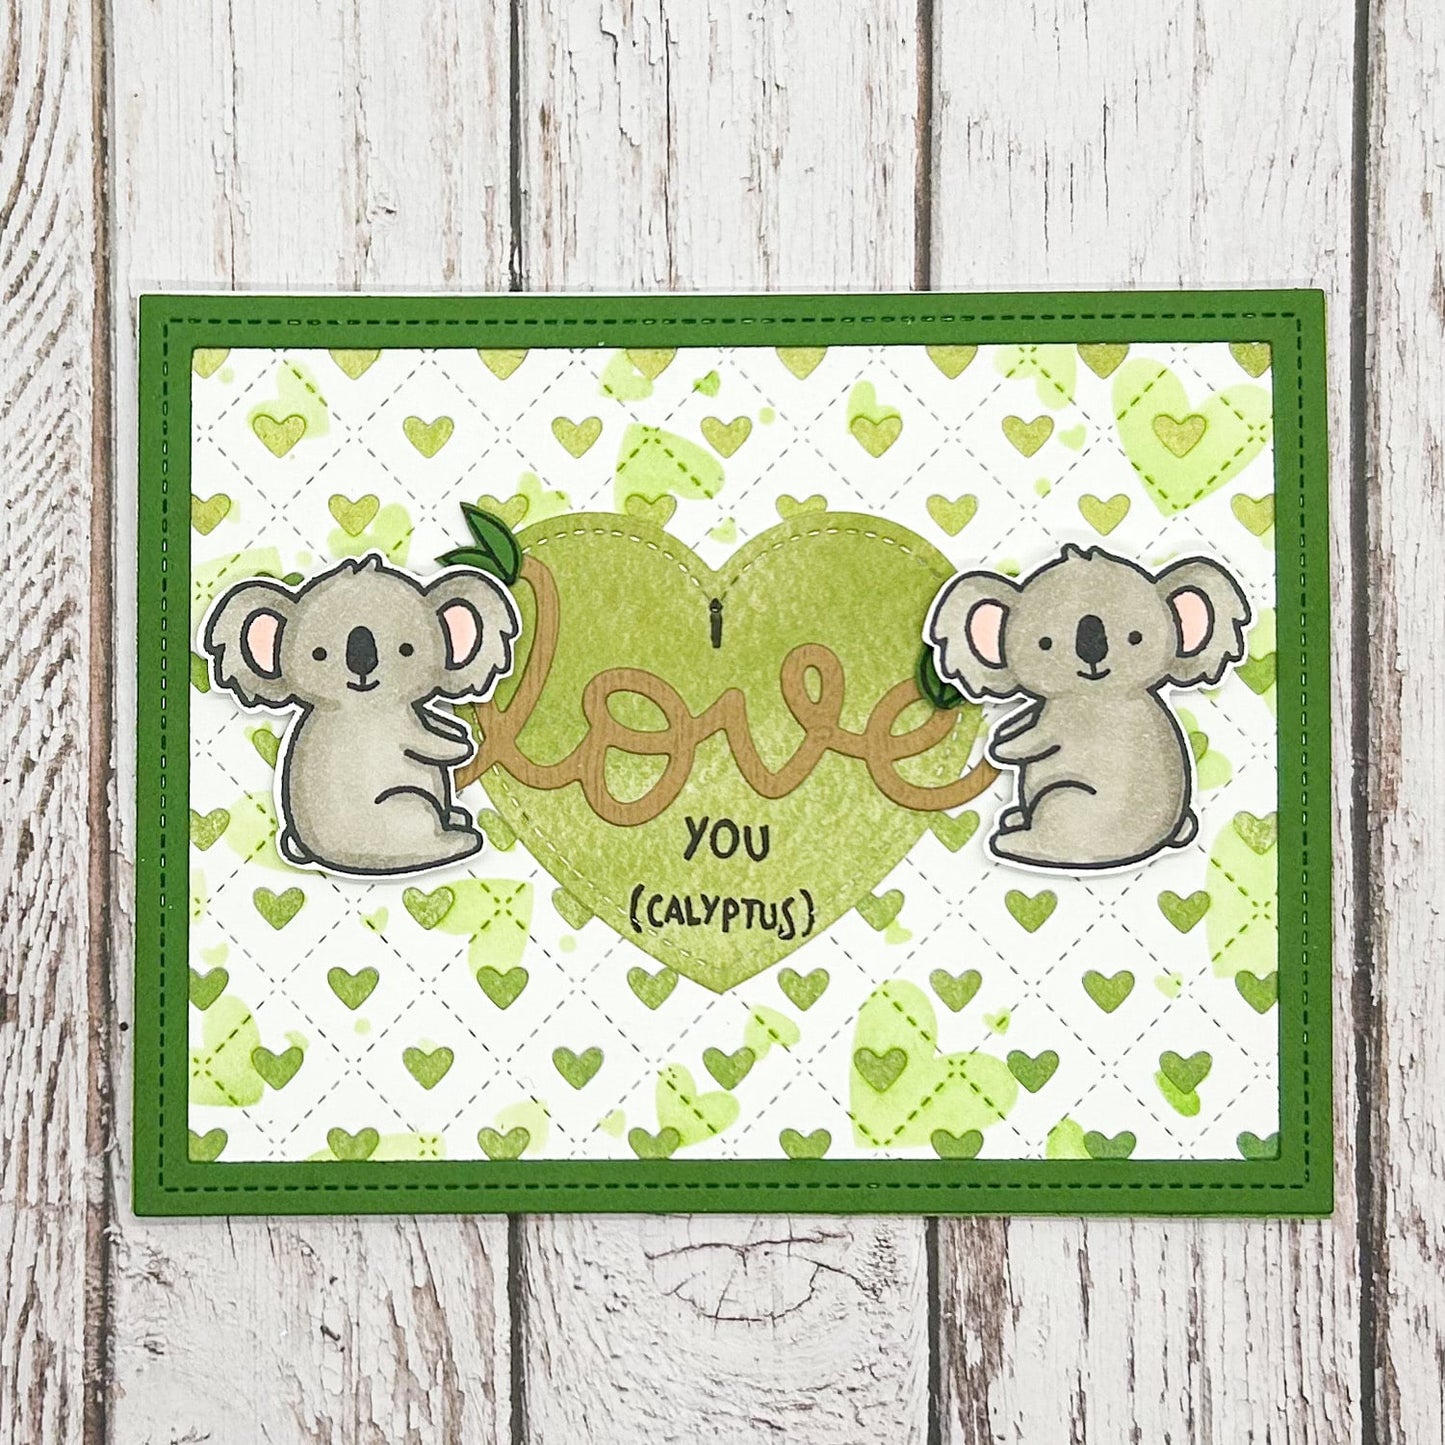 I Love You (calyptus) Koala Handmade Love & Valentine's Card